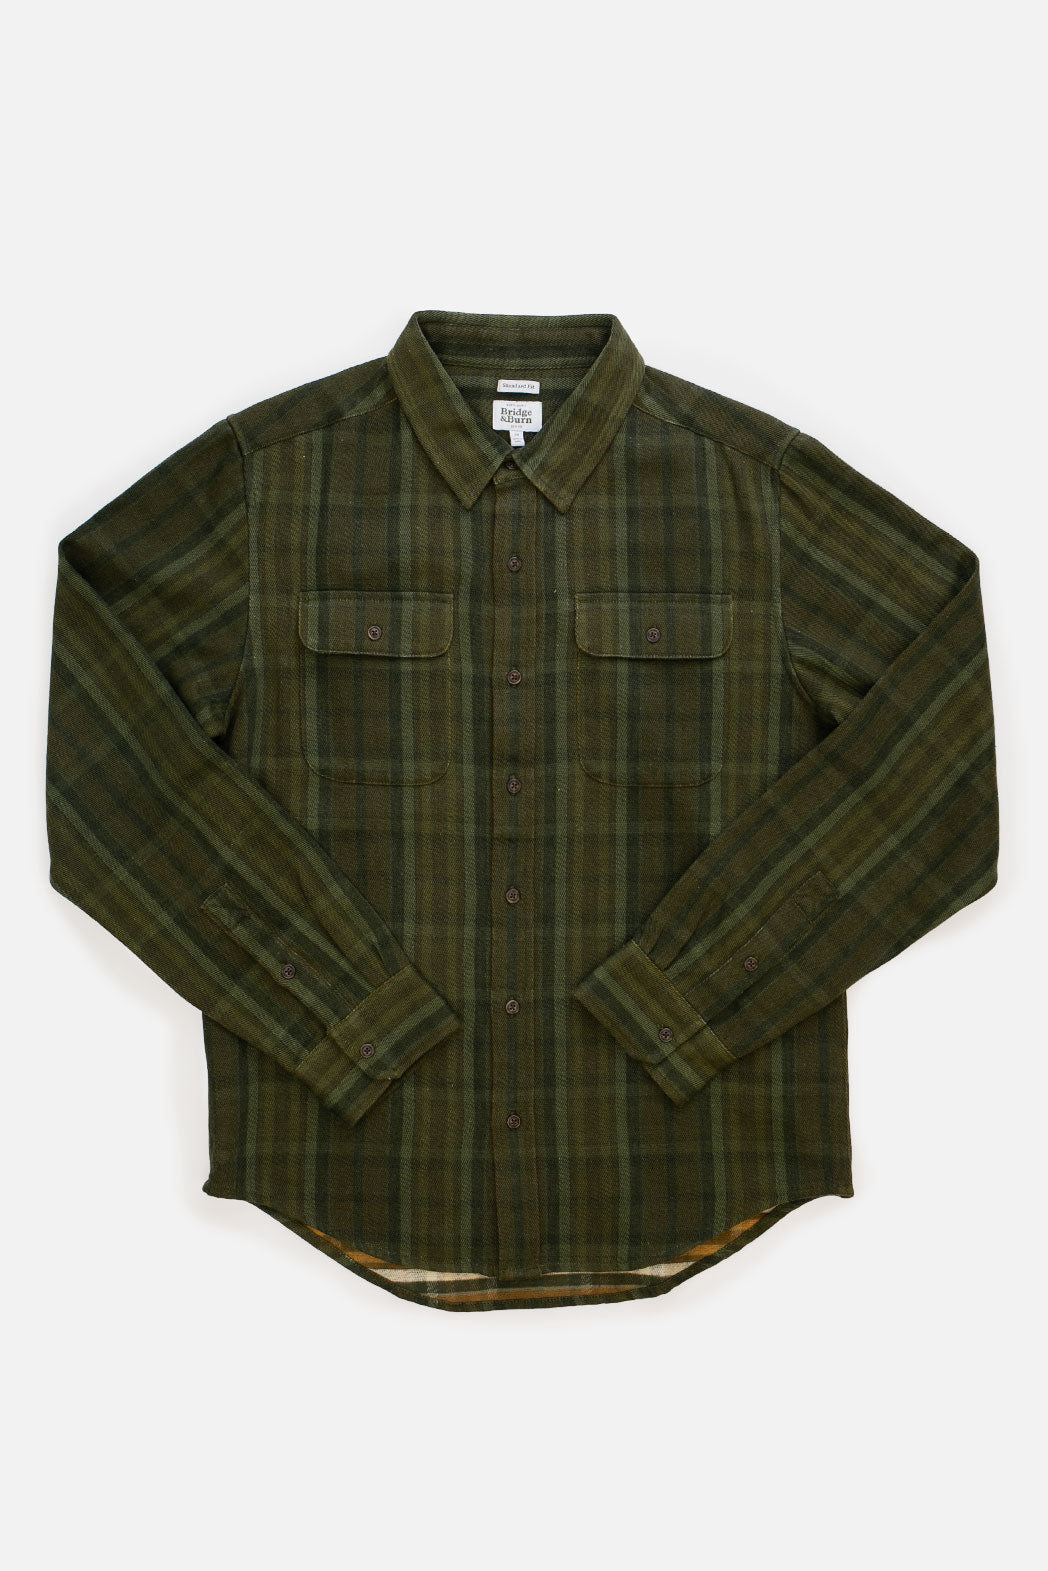 Bedford Shirt / Hemlock Plaid Doubleface